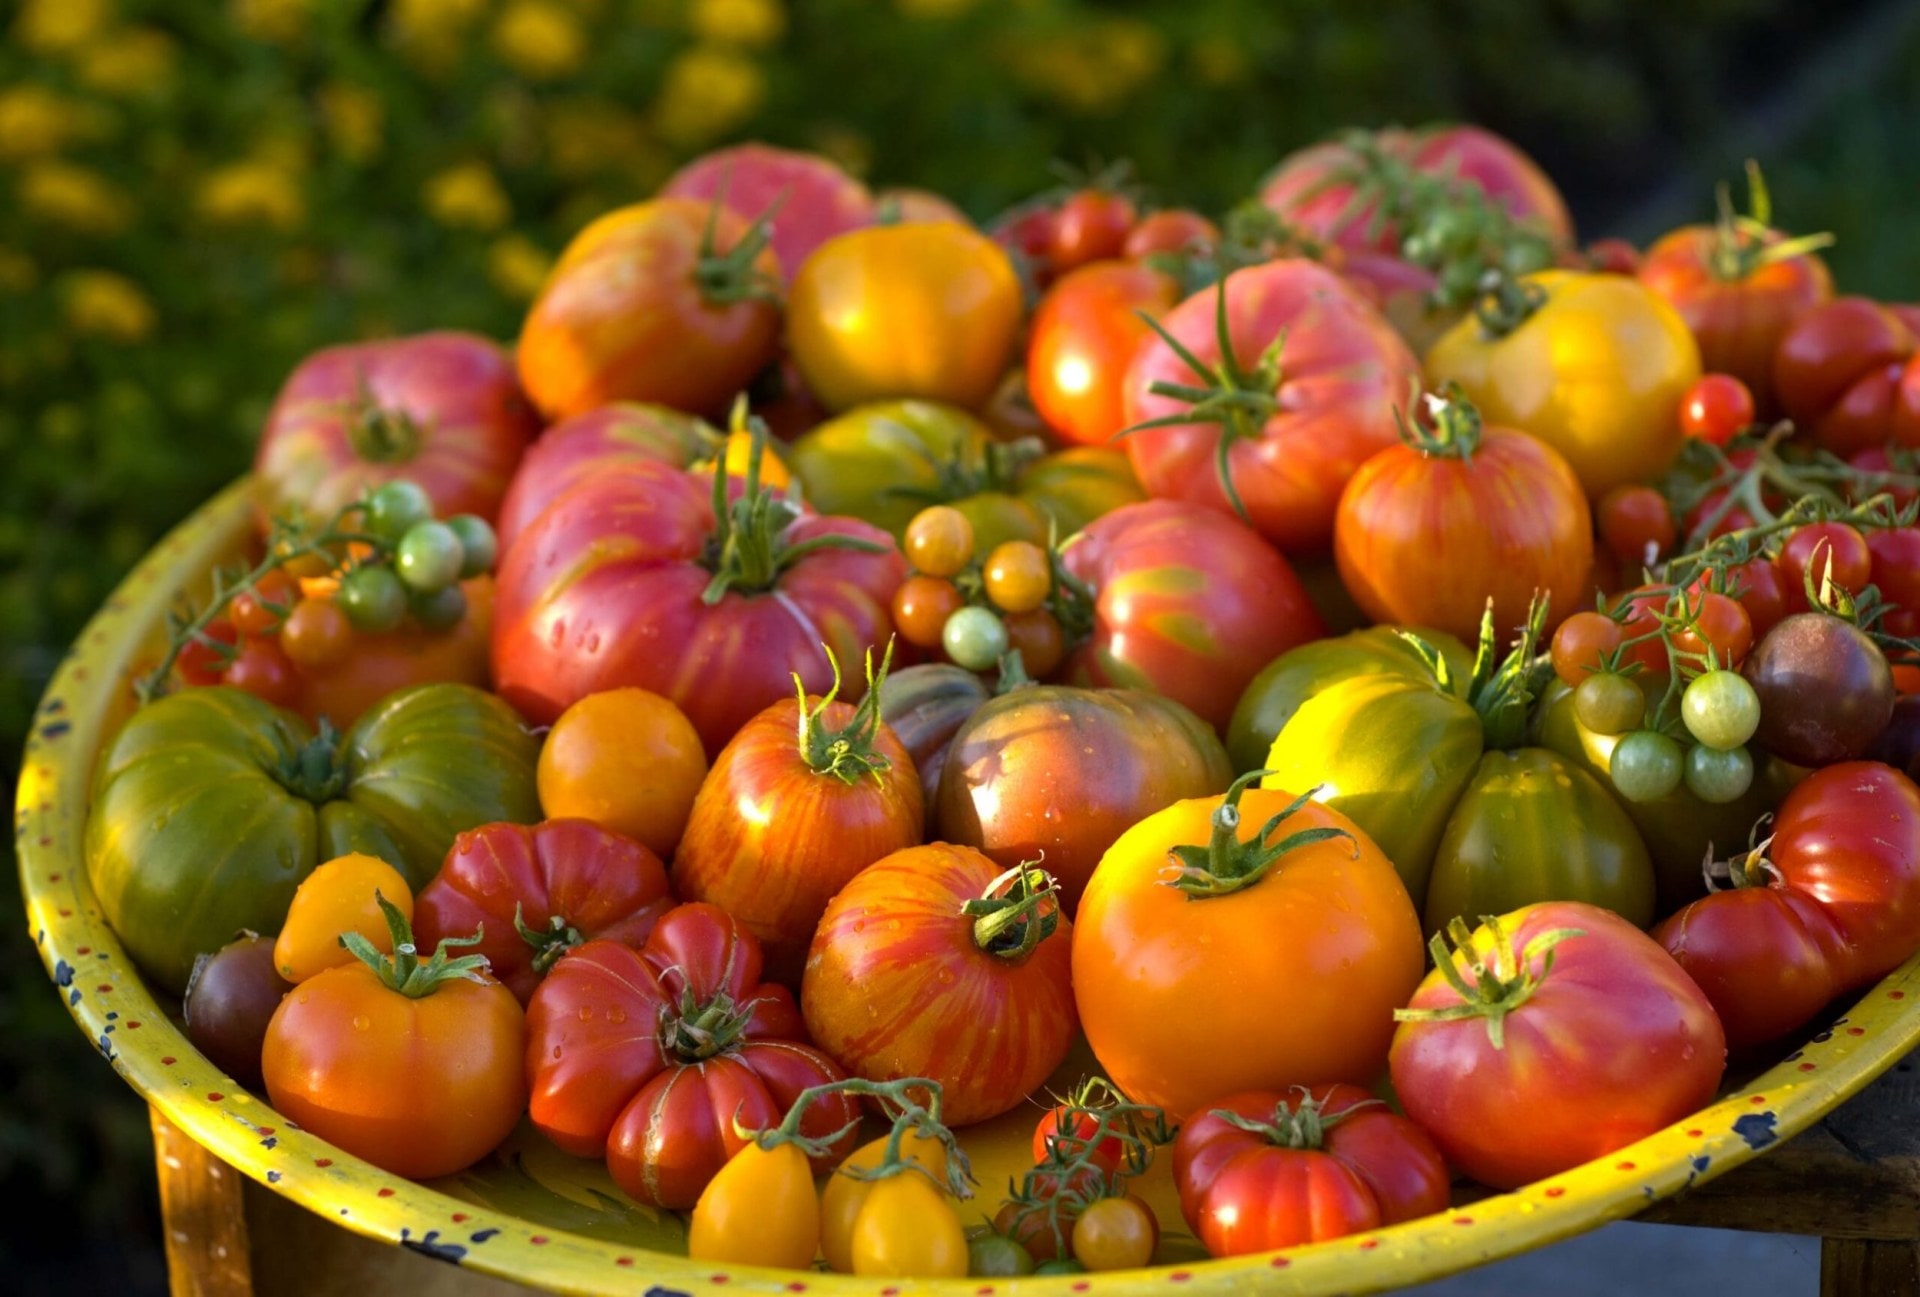 Various tomatoe varieties in a yellow bowl